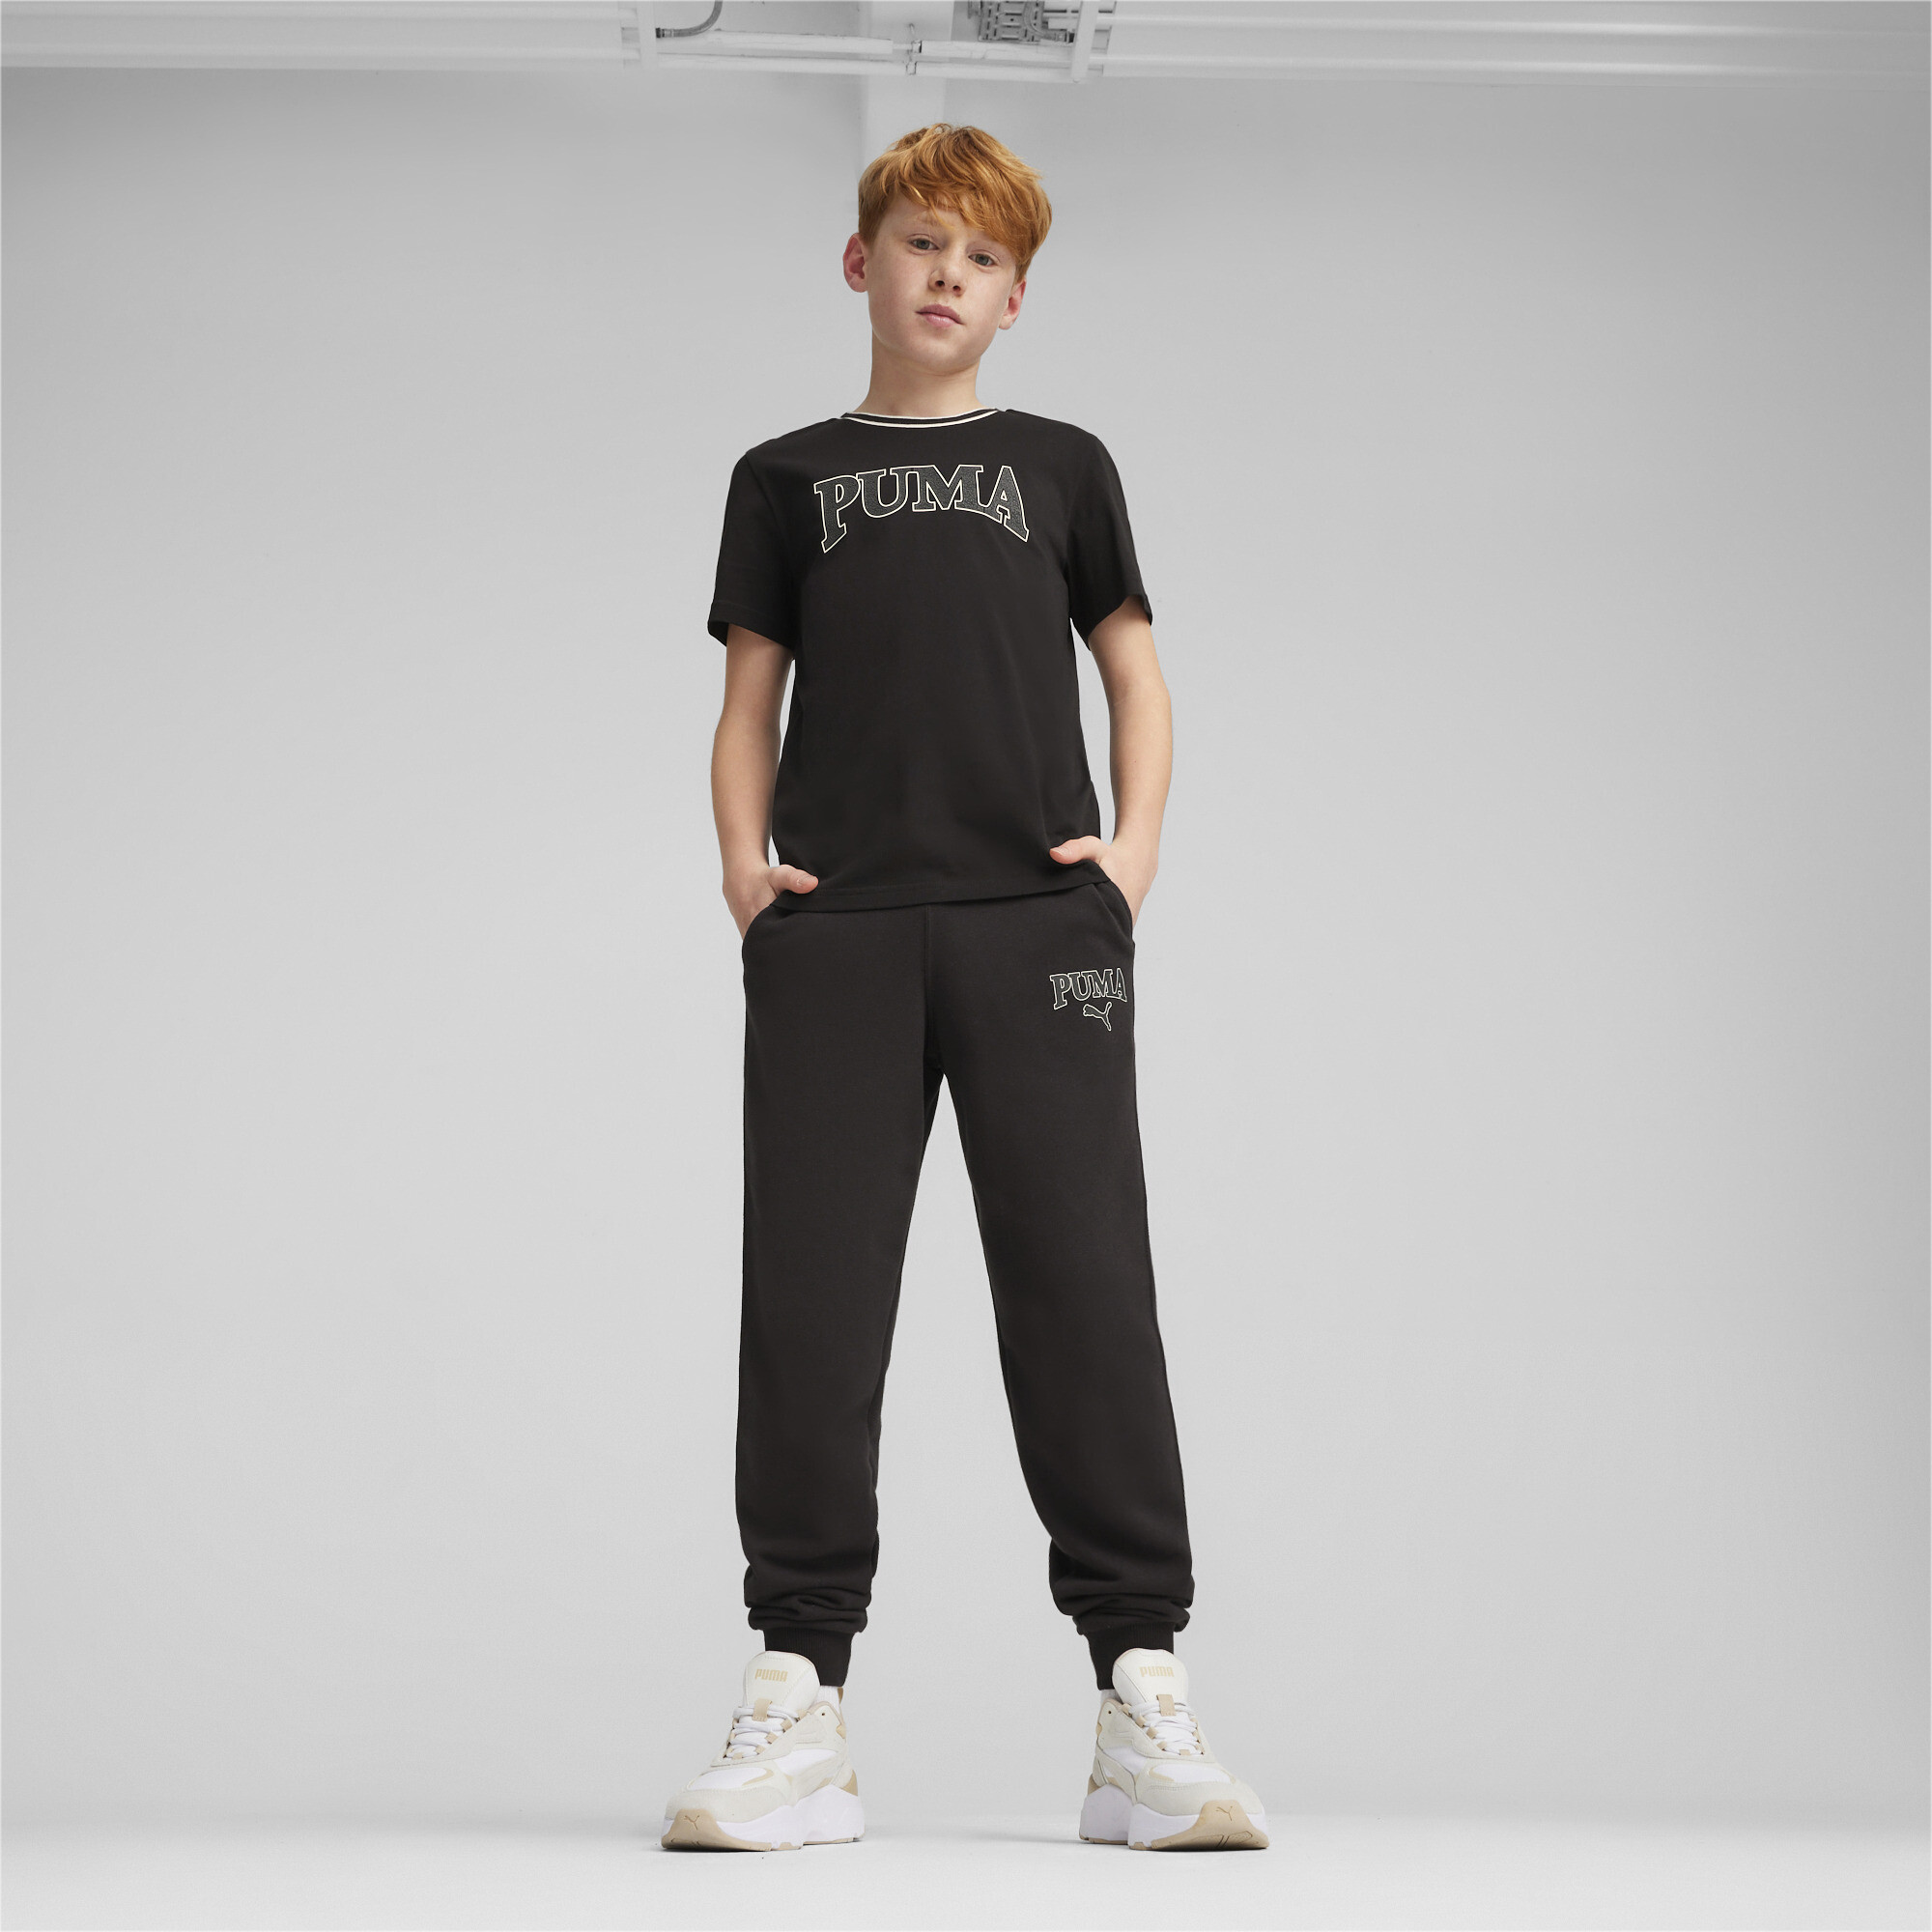 Men's Puma SQUAD Youth Sweatpants, Black, Size 7-8Y, Age